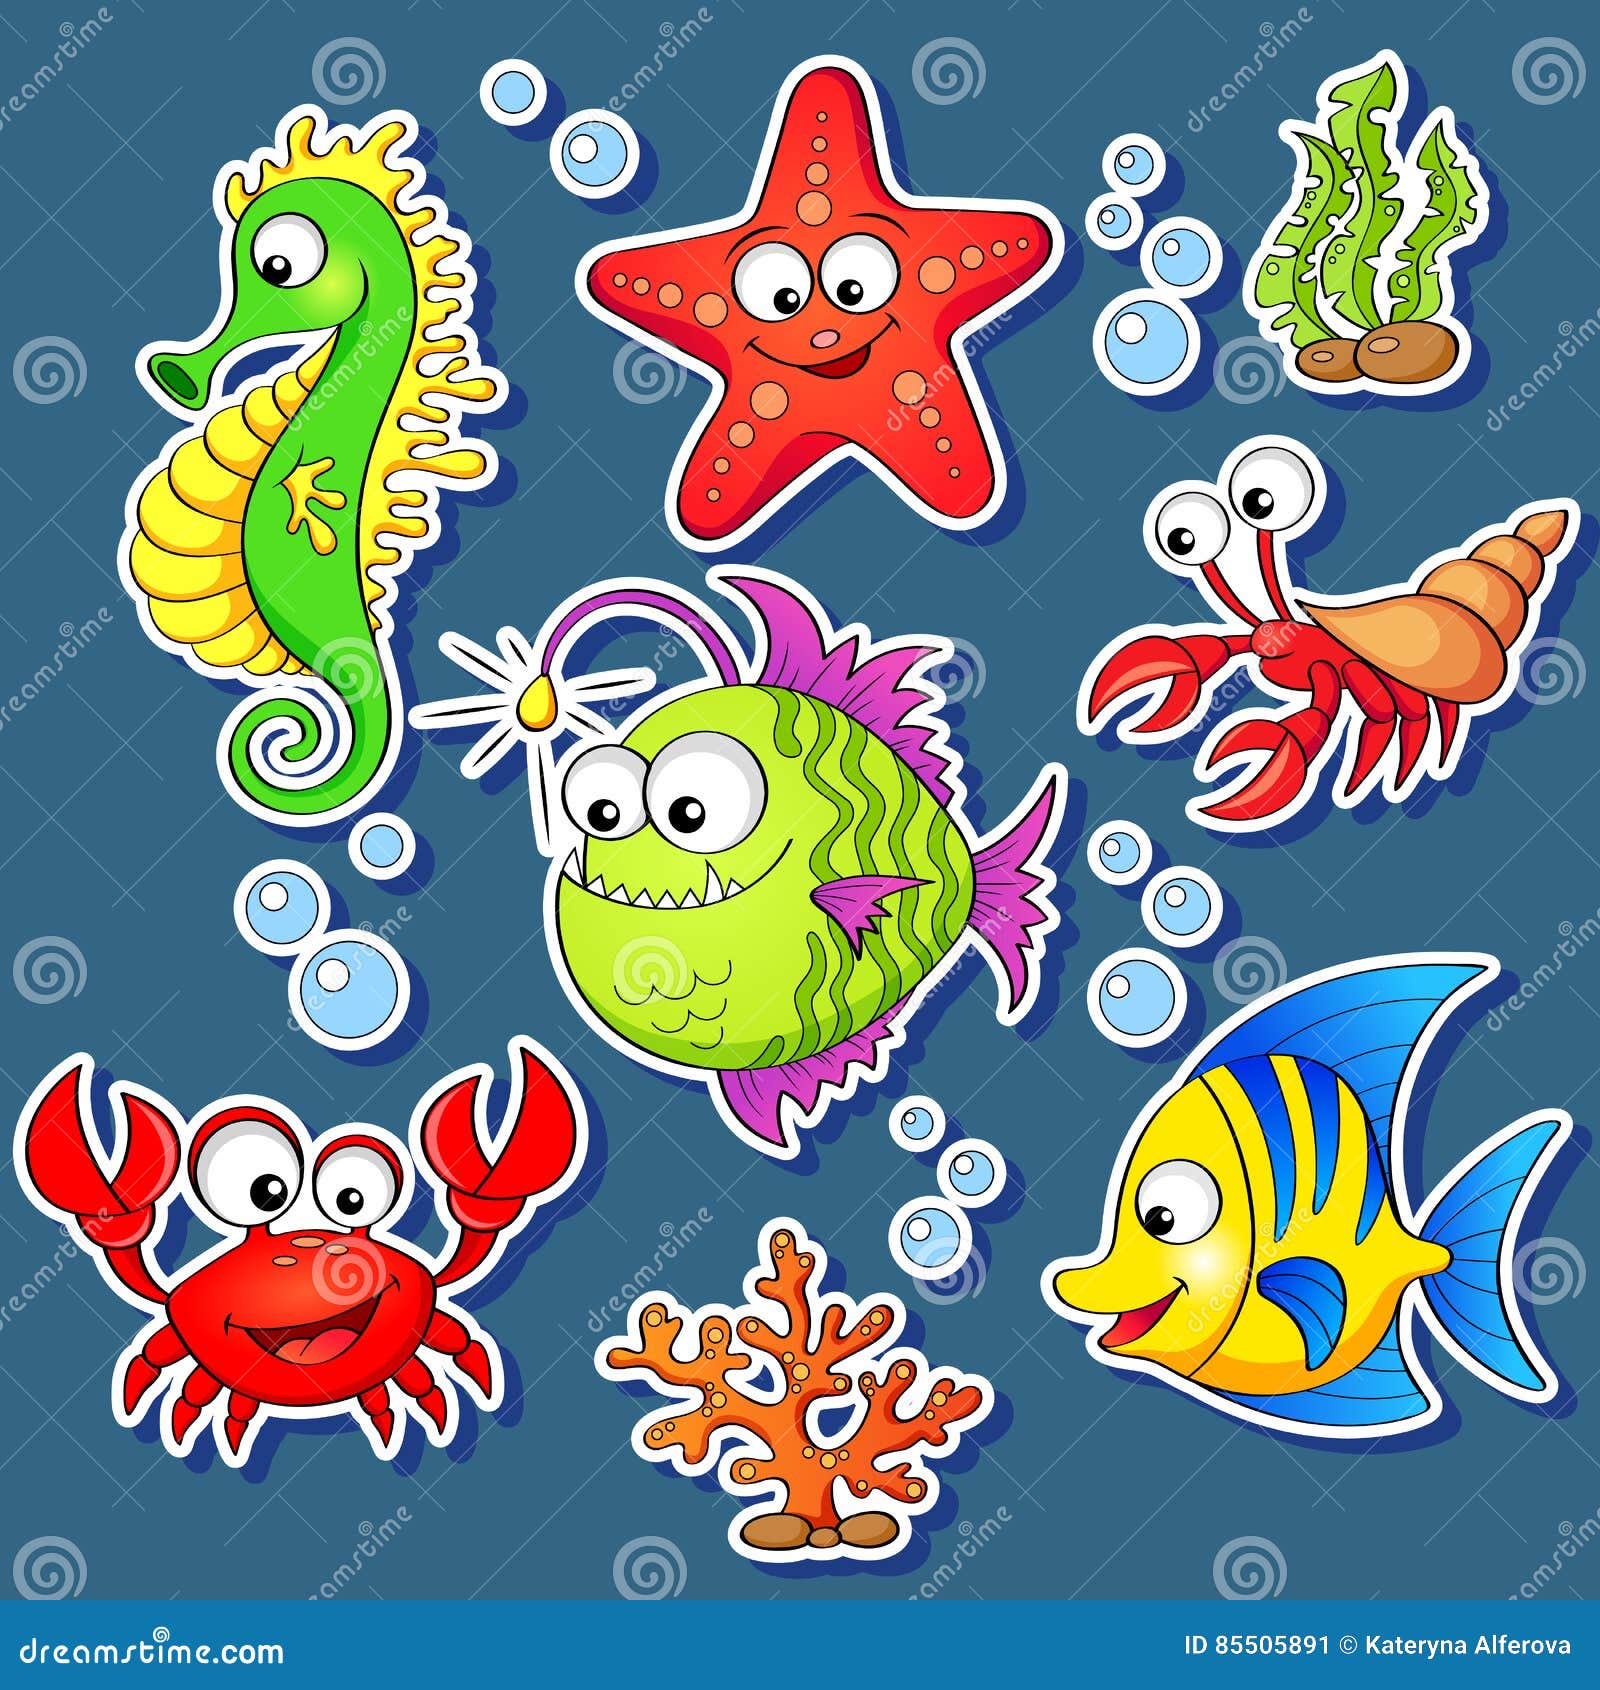 stickers of cute cartoon sea animals